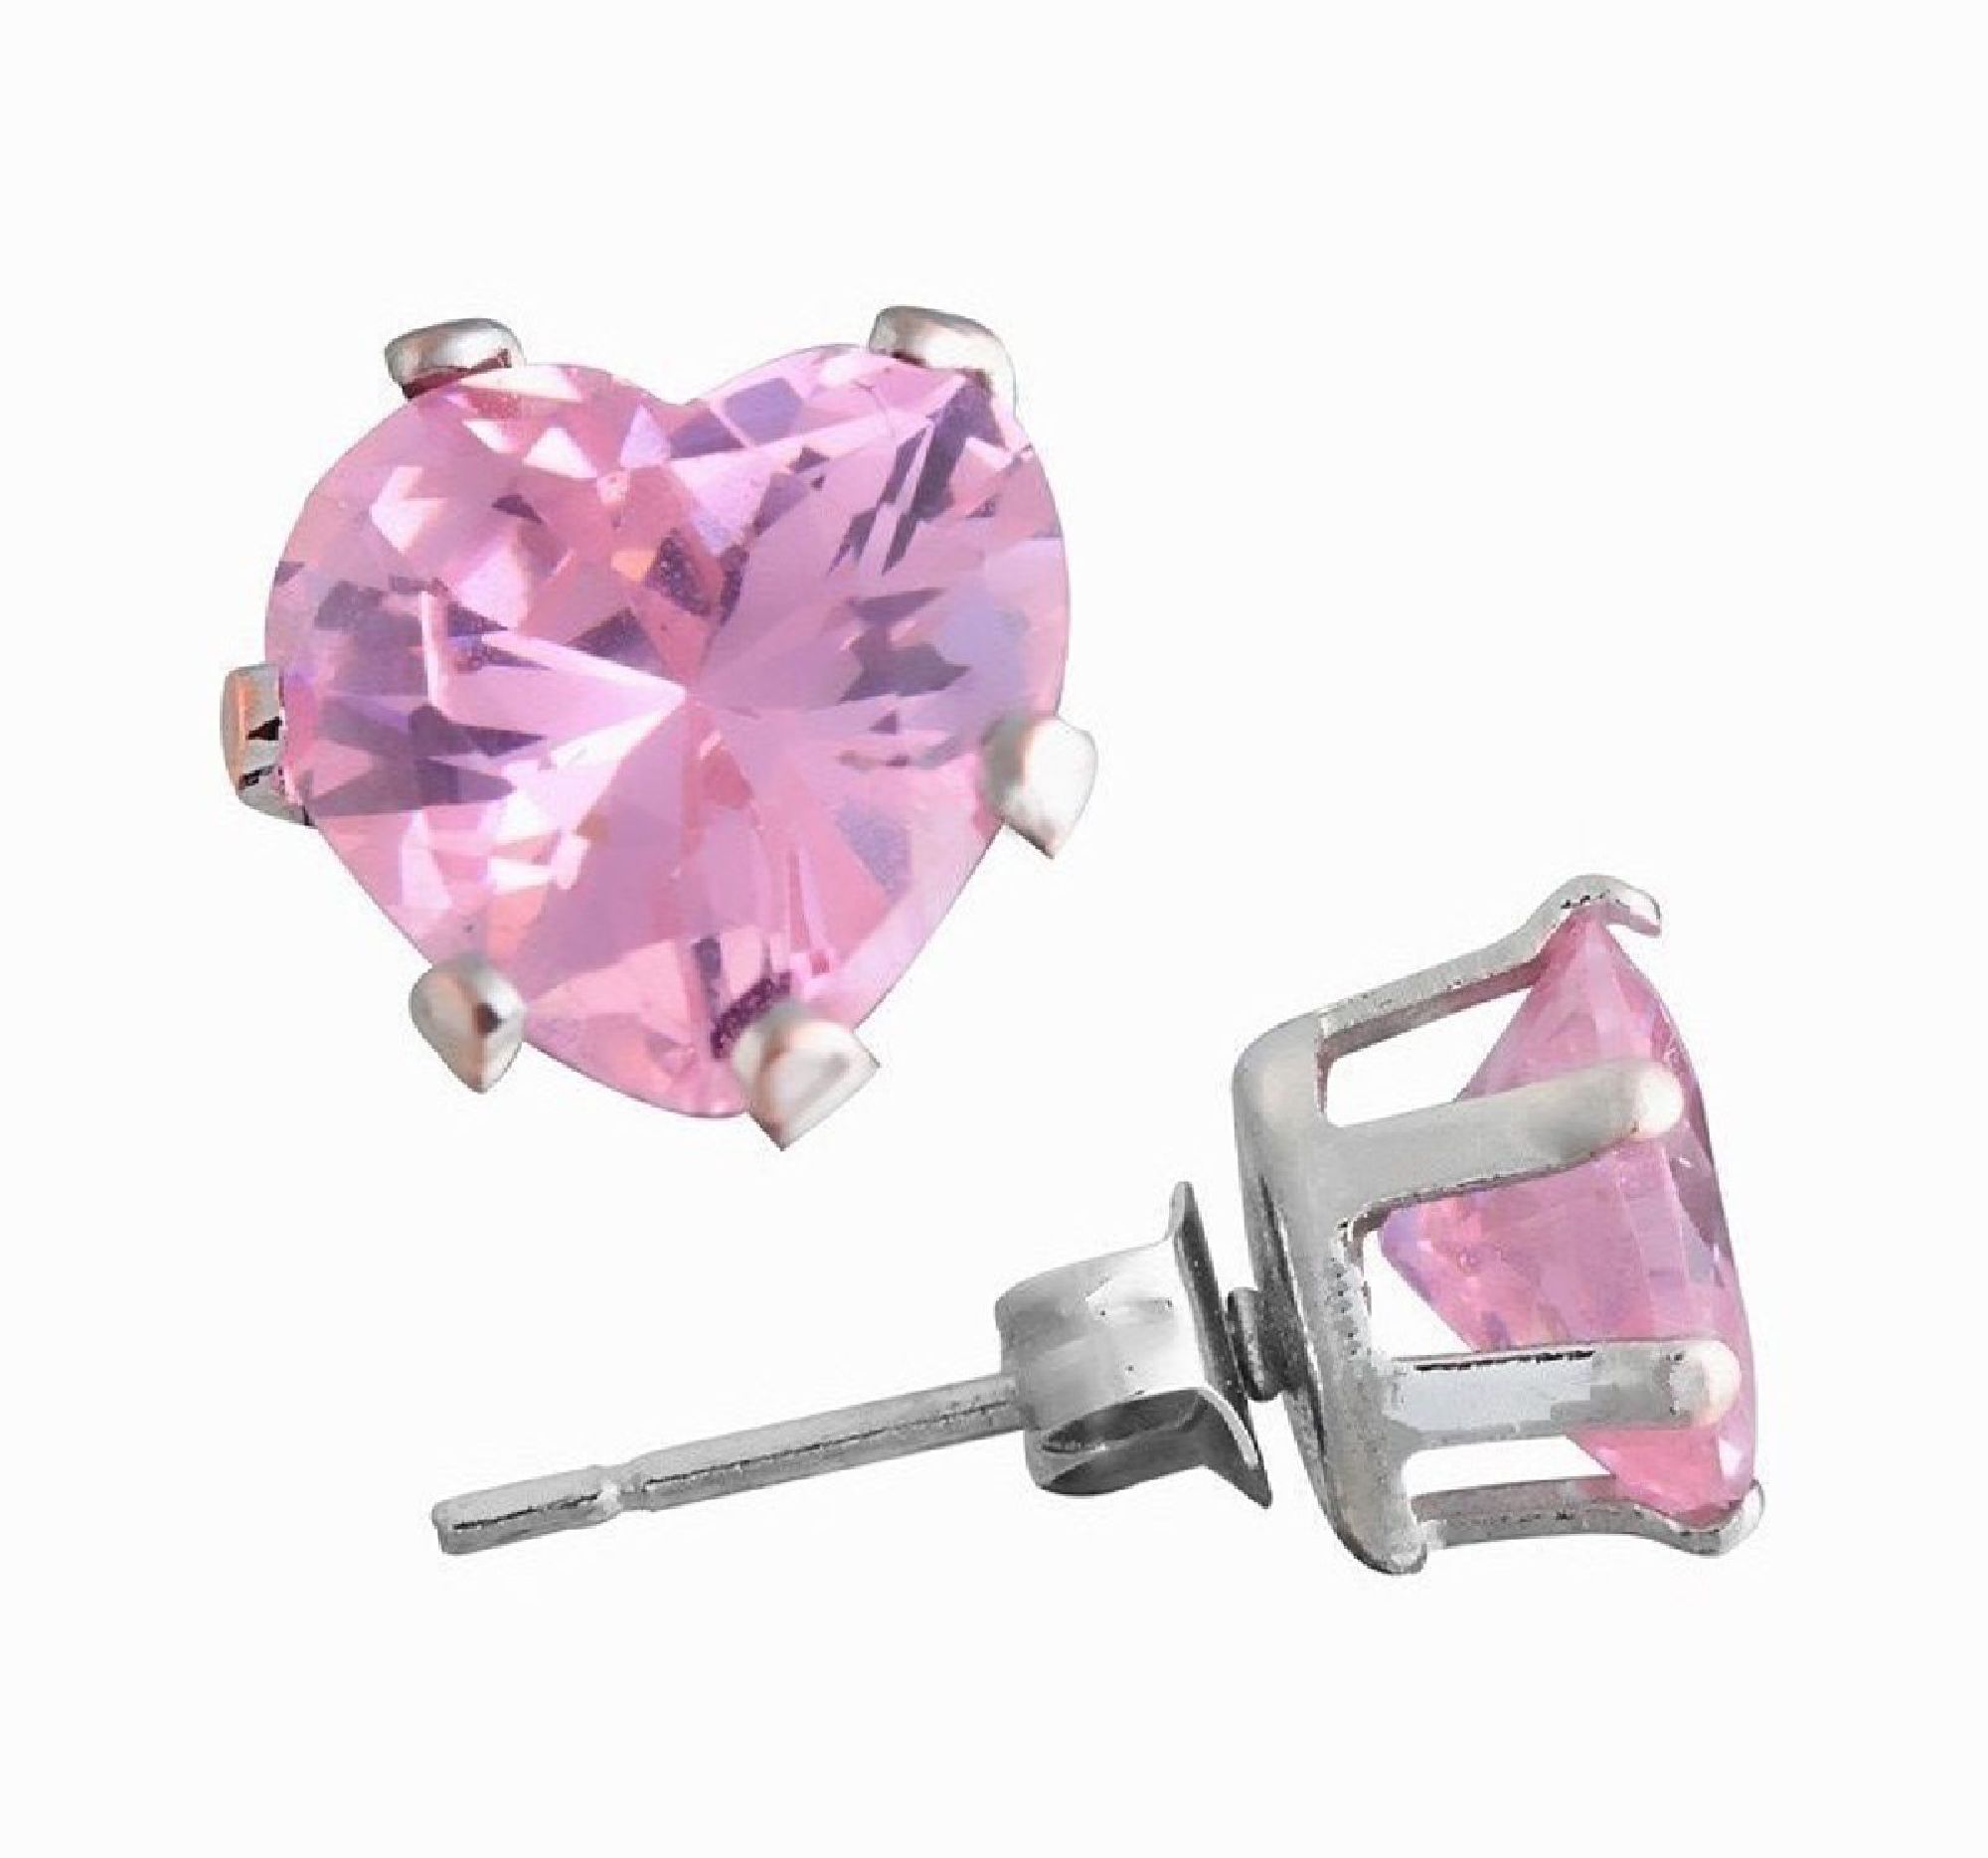 1 Carat Heart Shape Pink Diamond manmade Stud Earrings for Men in 14k White Gold over Sterling Silver Designed in France